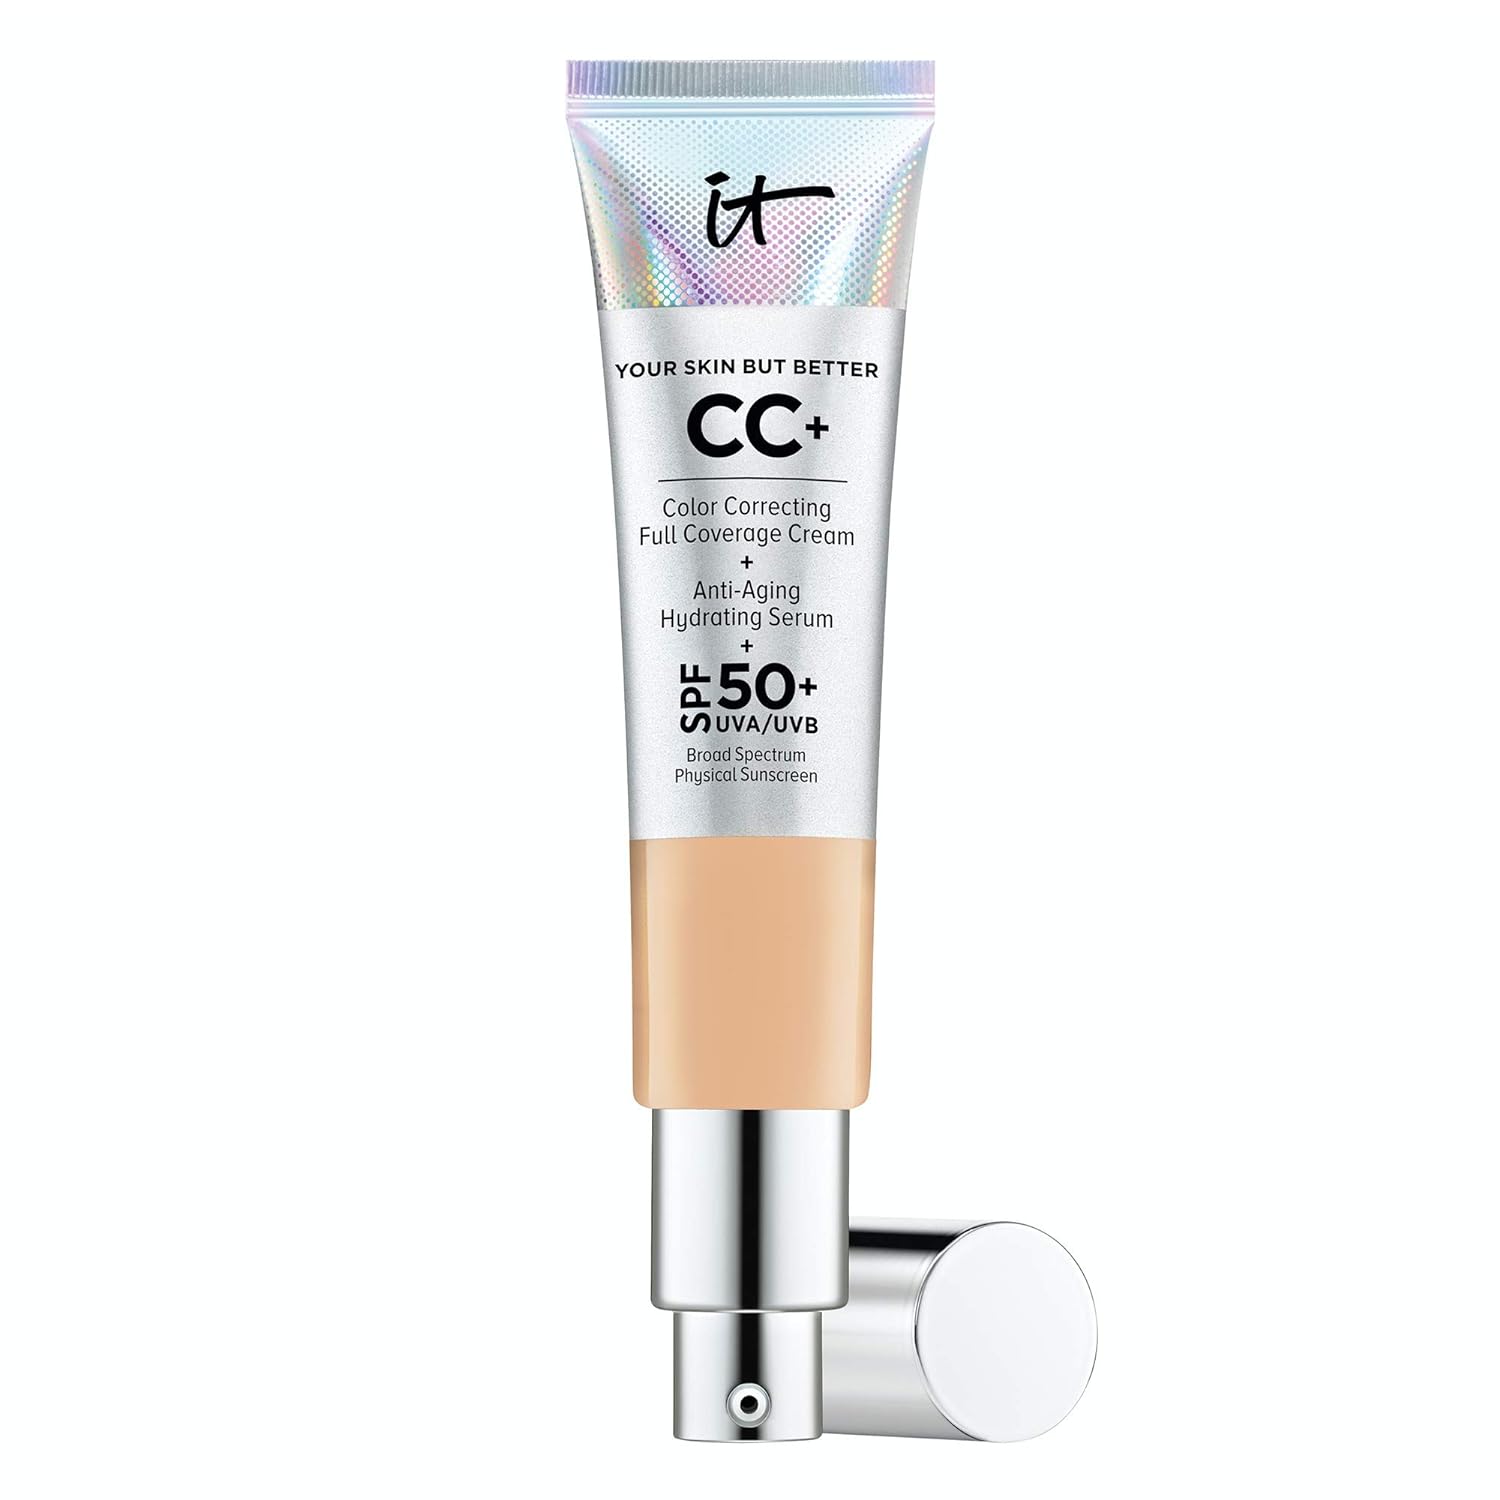  IT Cosmetics Your Skin But Better CC+ Cream, Medium Tan (W) - Color Correcting Cream, Full-Coverage Foundation, Anti-Aging Serum & SPF 50+ Sunscreen - Natural Finish - 1.08 fl oz